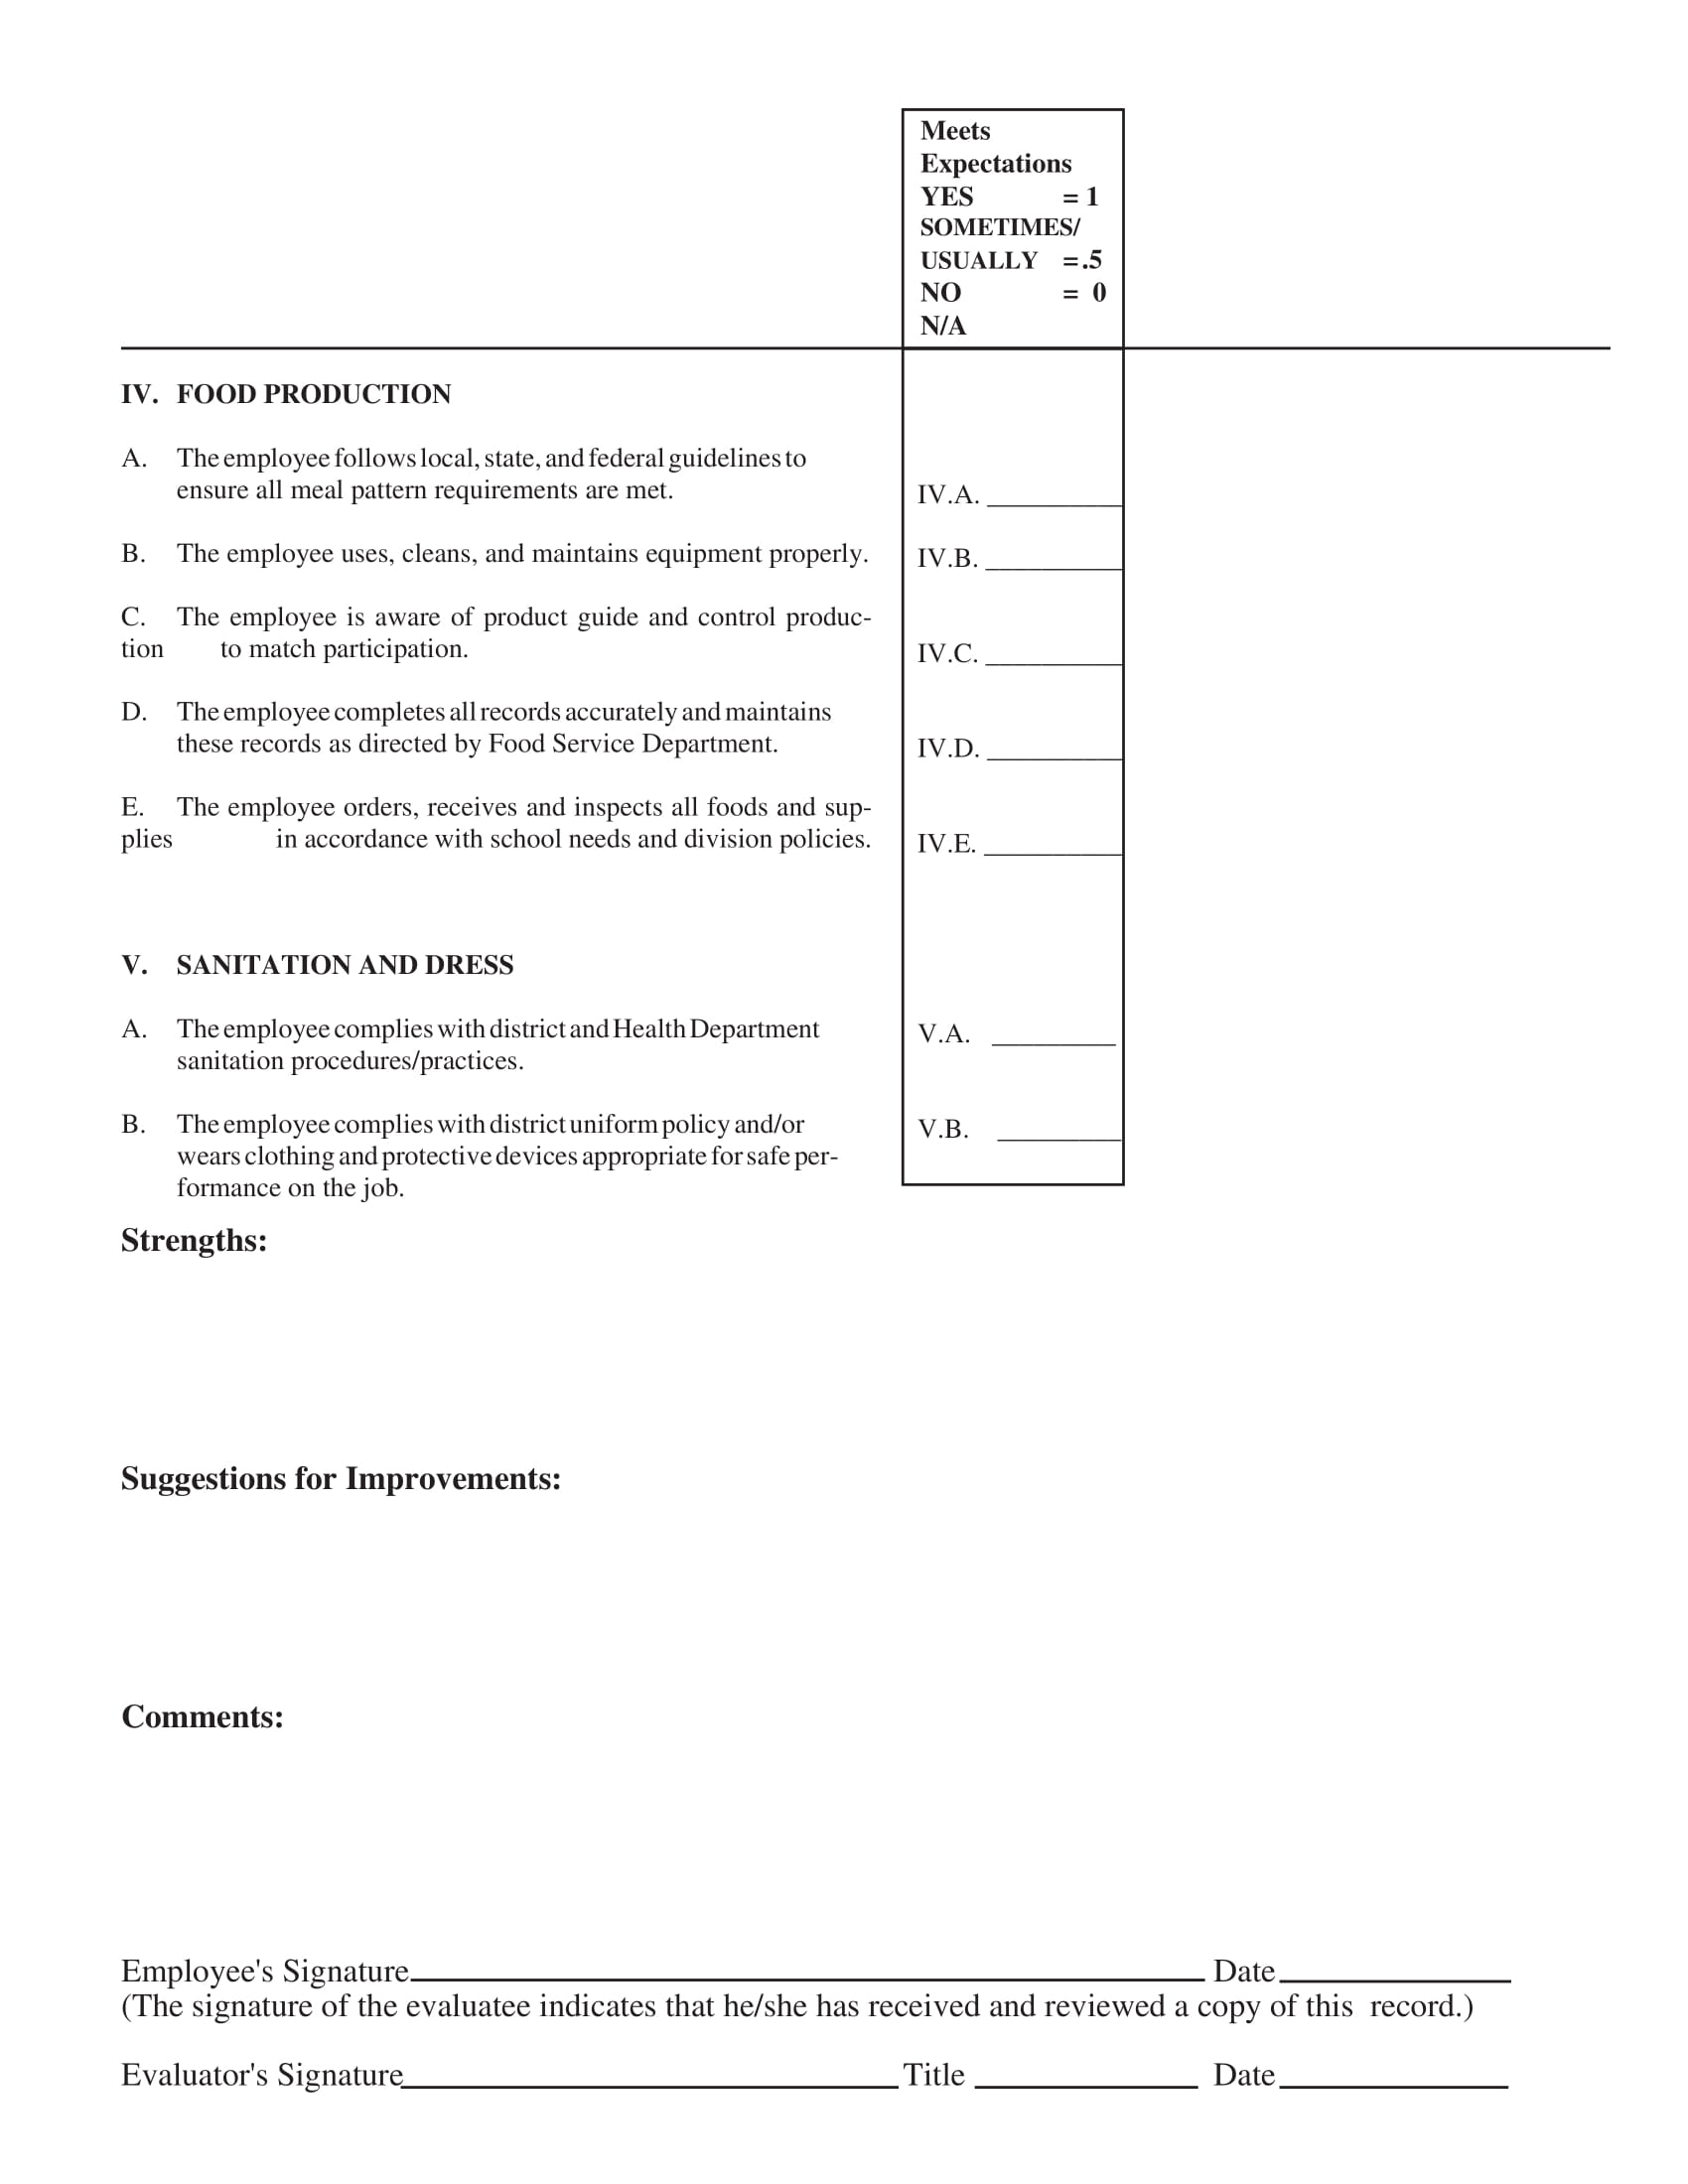 evaluation form for kitchen staff 4